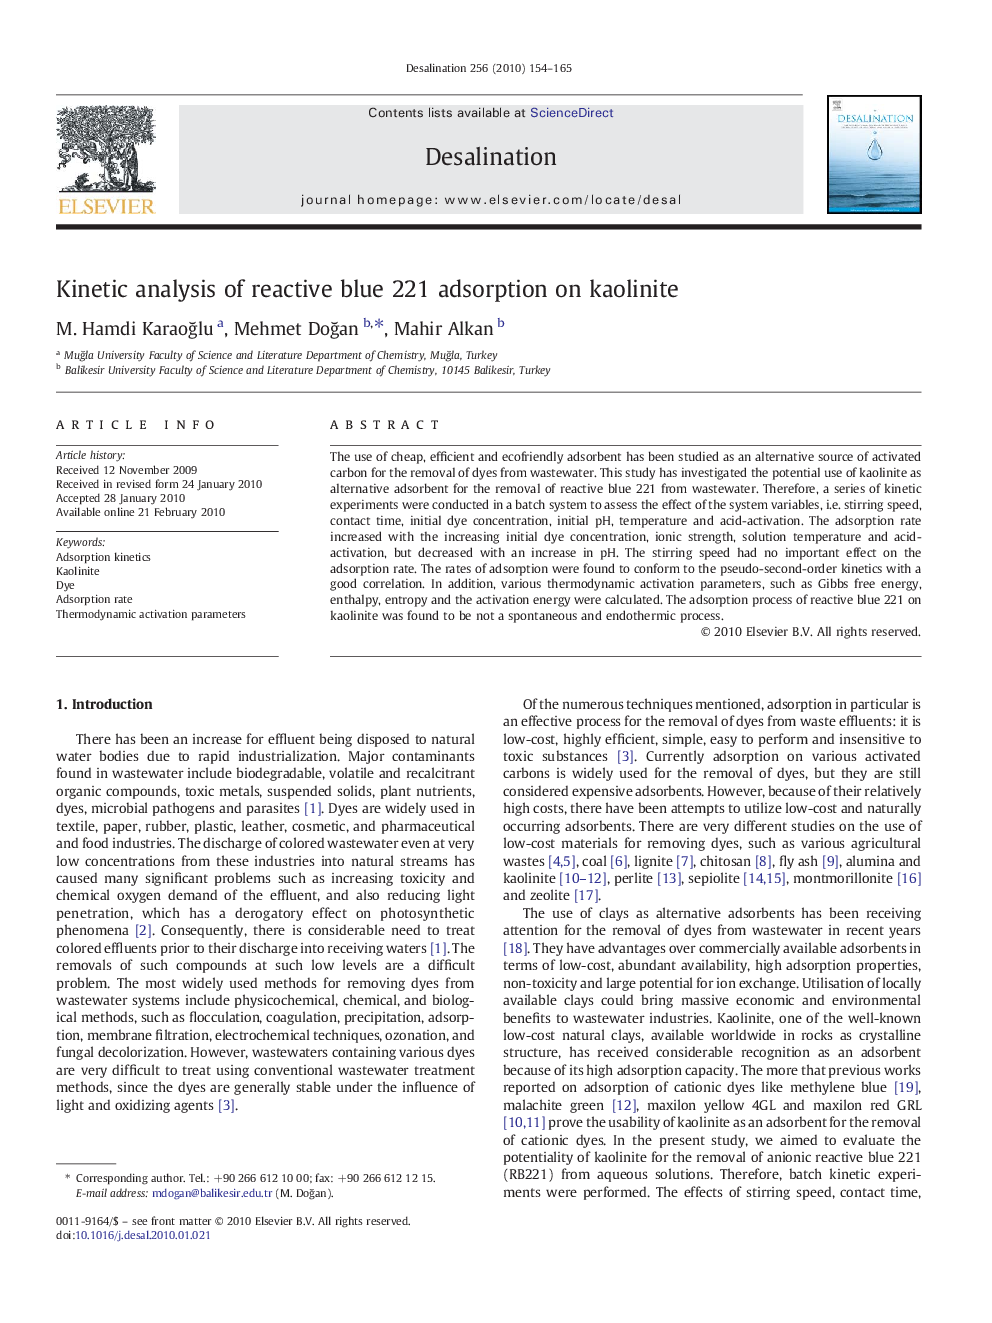 Kinetic analysis of reactive blue 221 adsorption on kaolinite